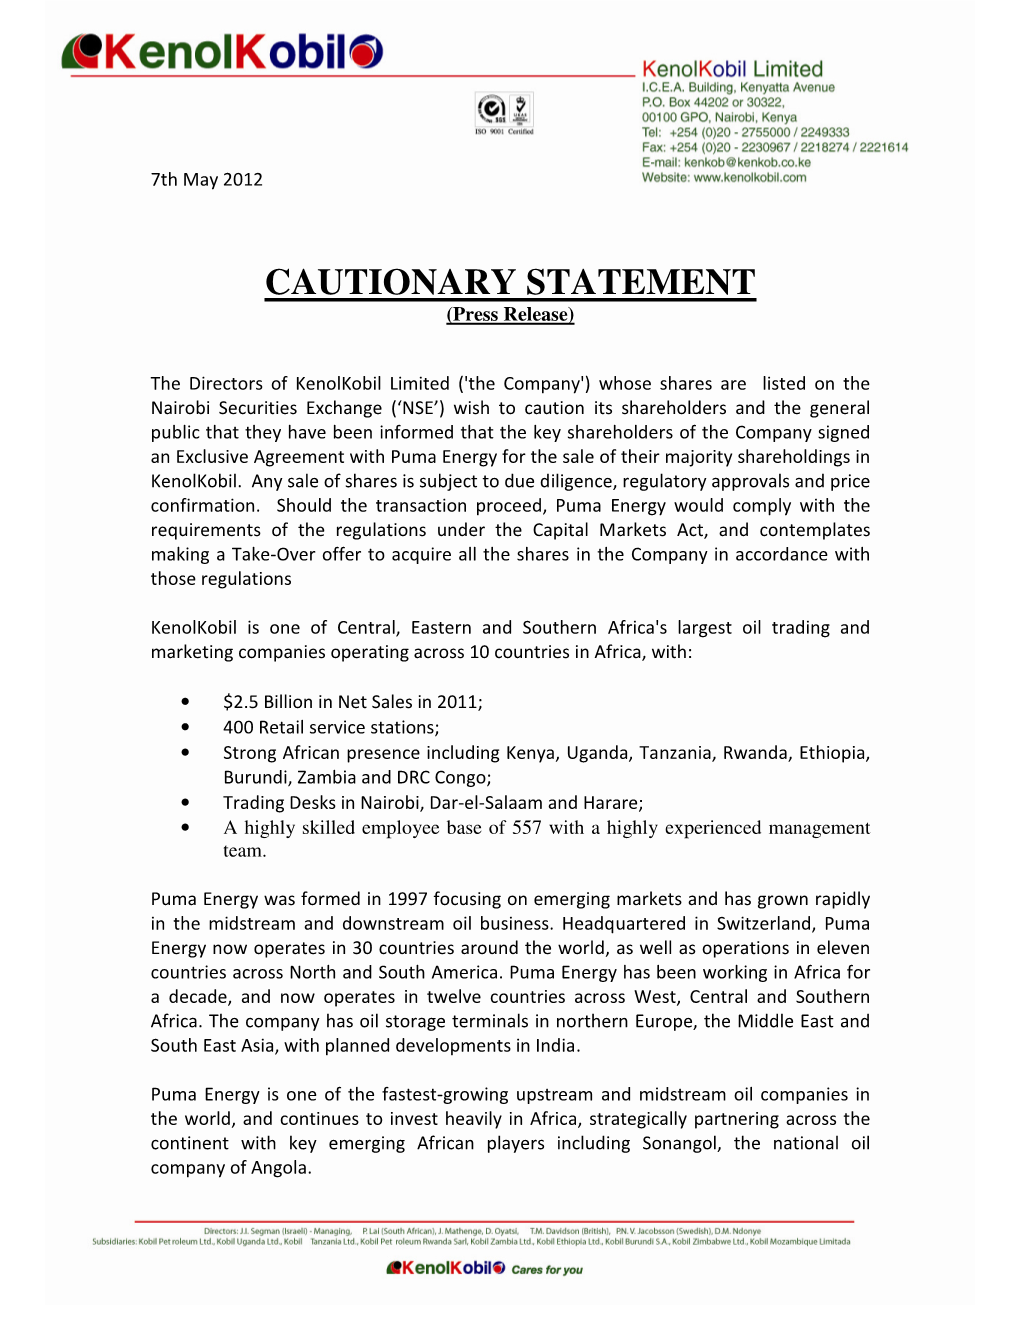 CAUTIONARY STATEMENT (Press Release)